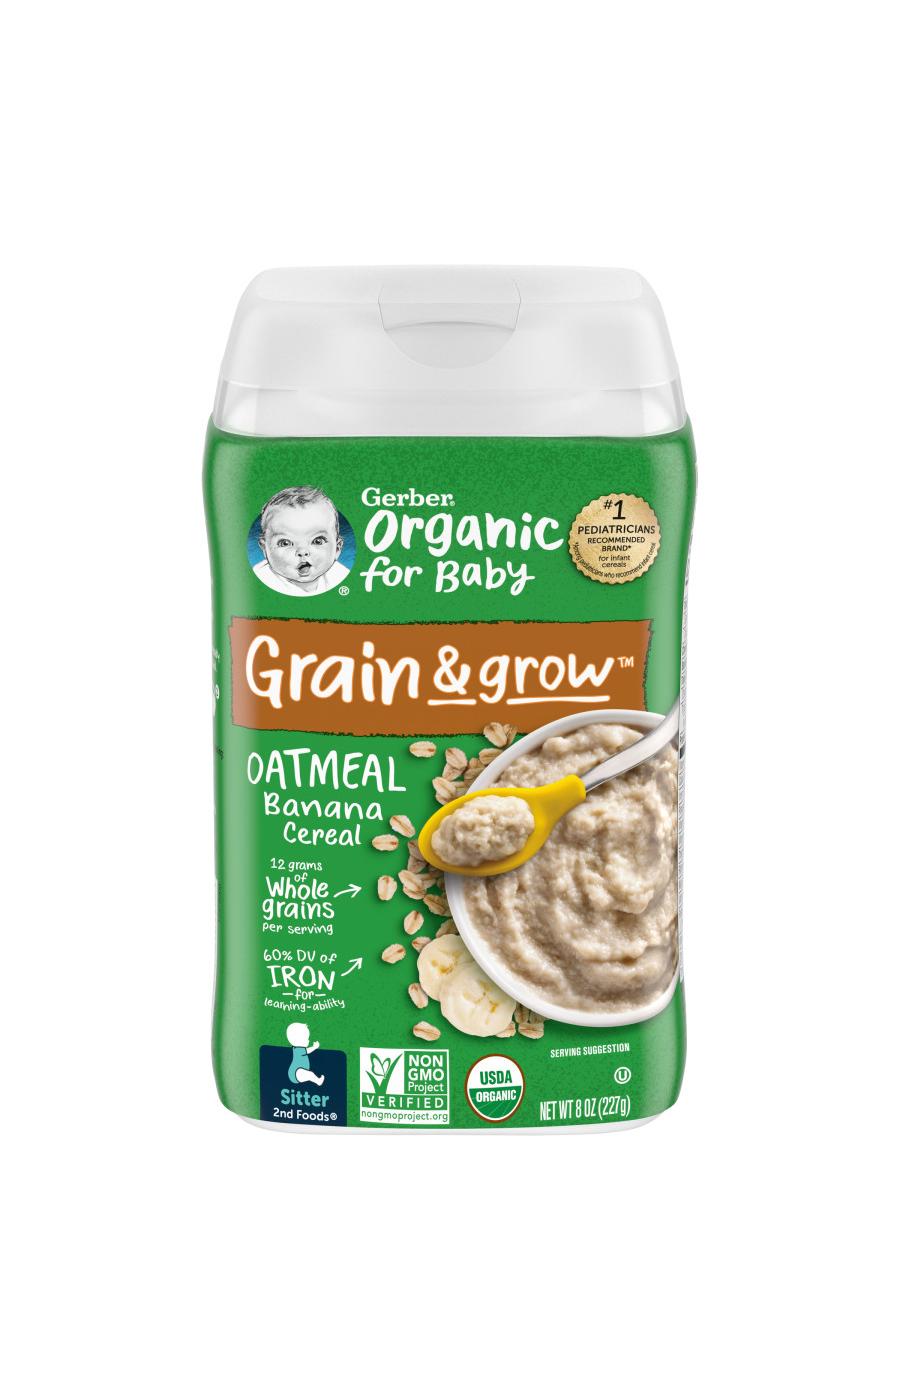 Gerber Organic for Baby Grain & Grow Oatmeal - Banana Cereal; image 1 of 8